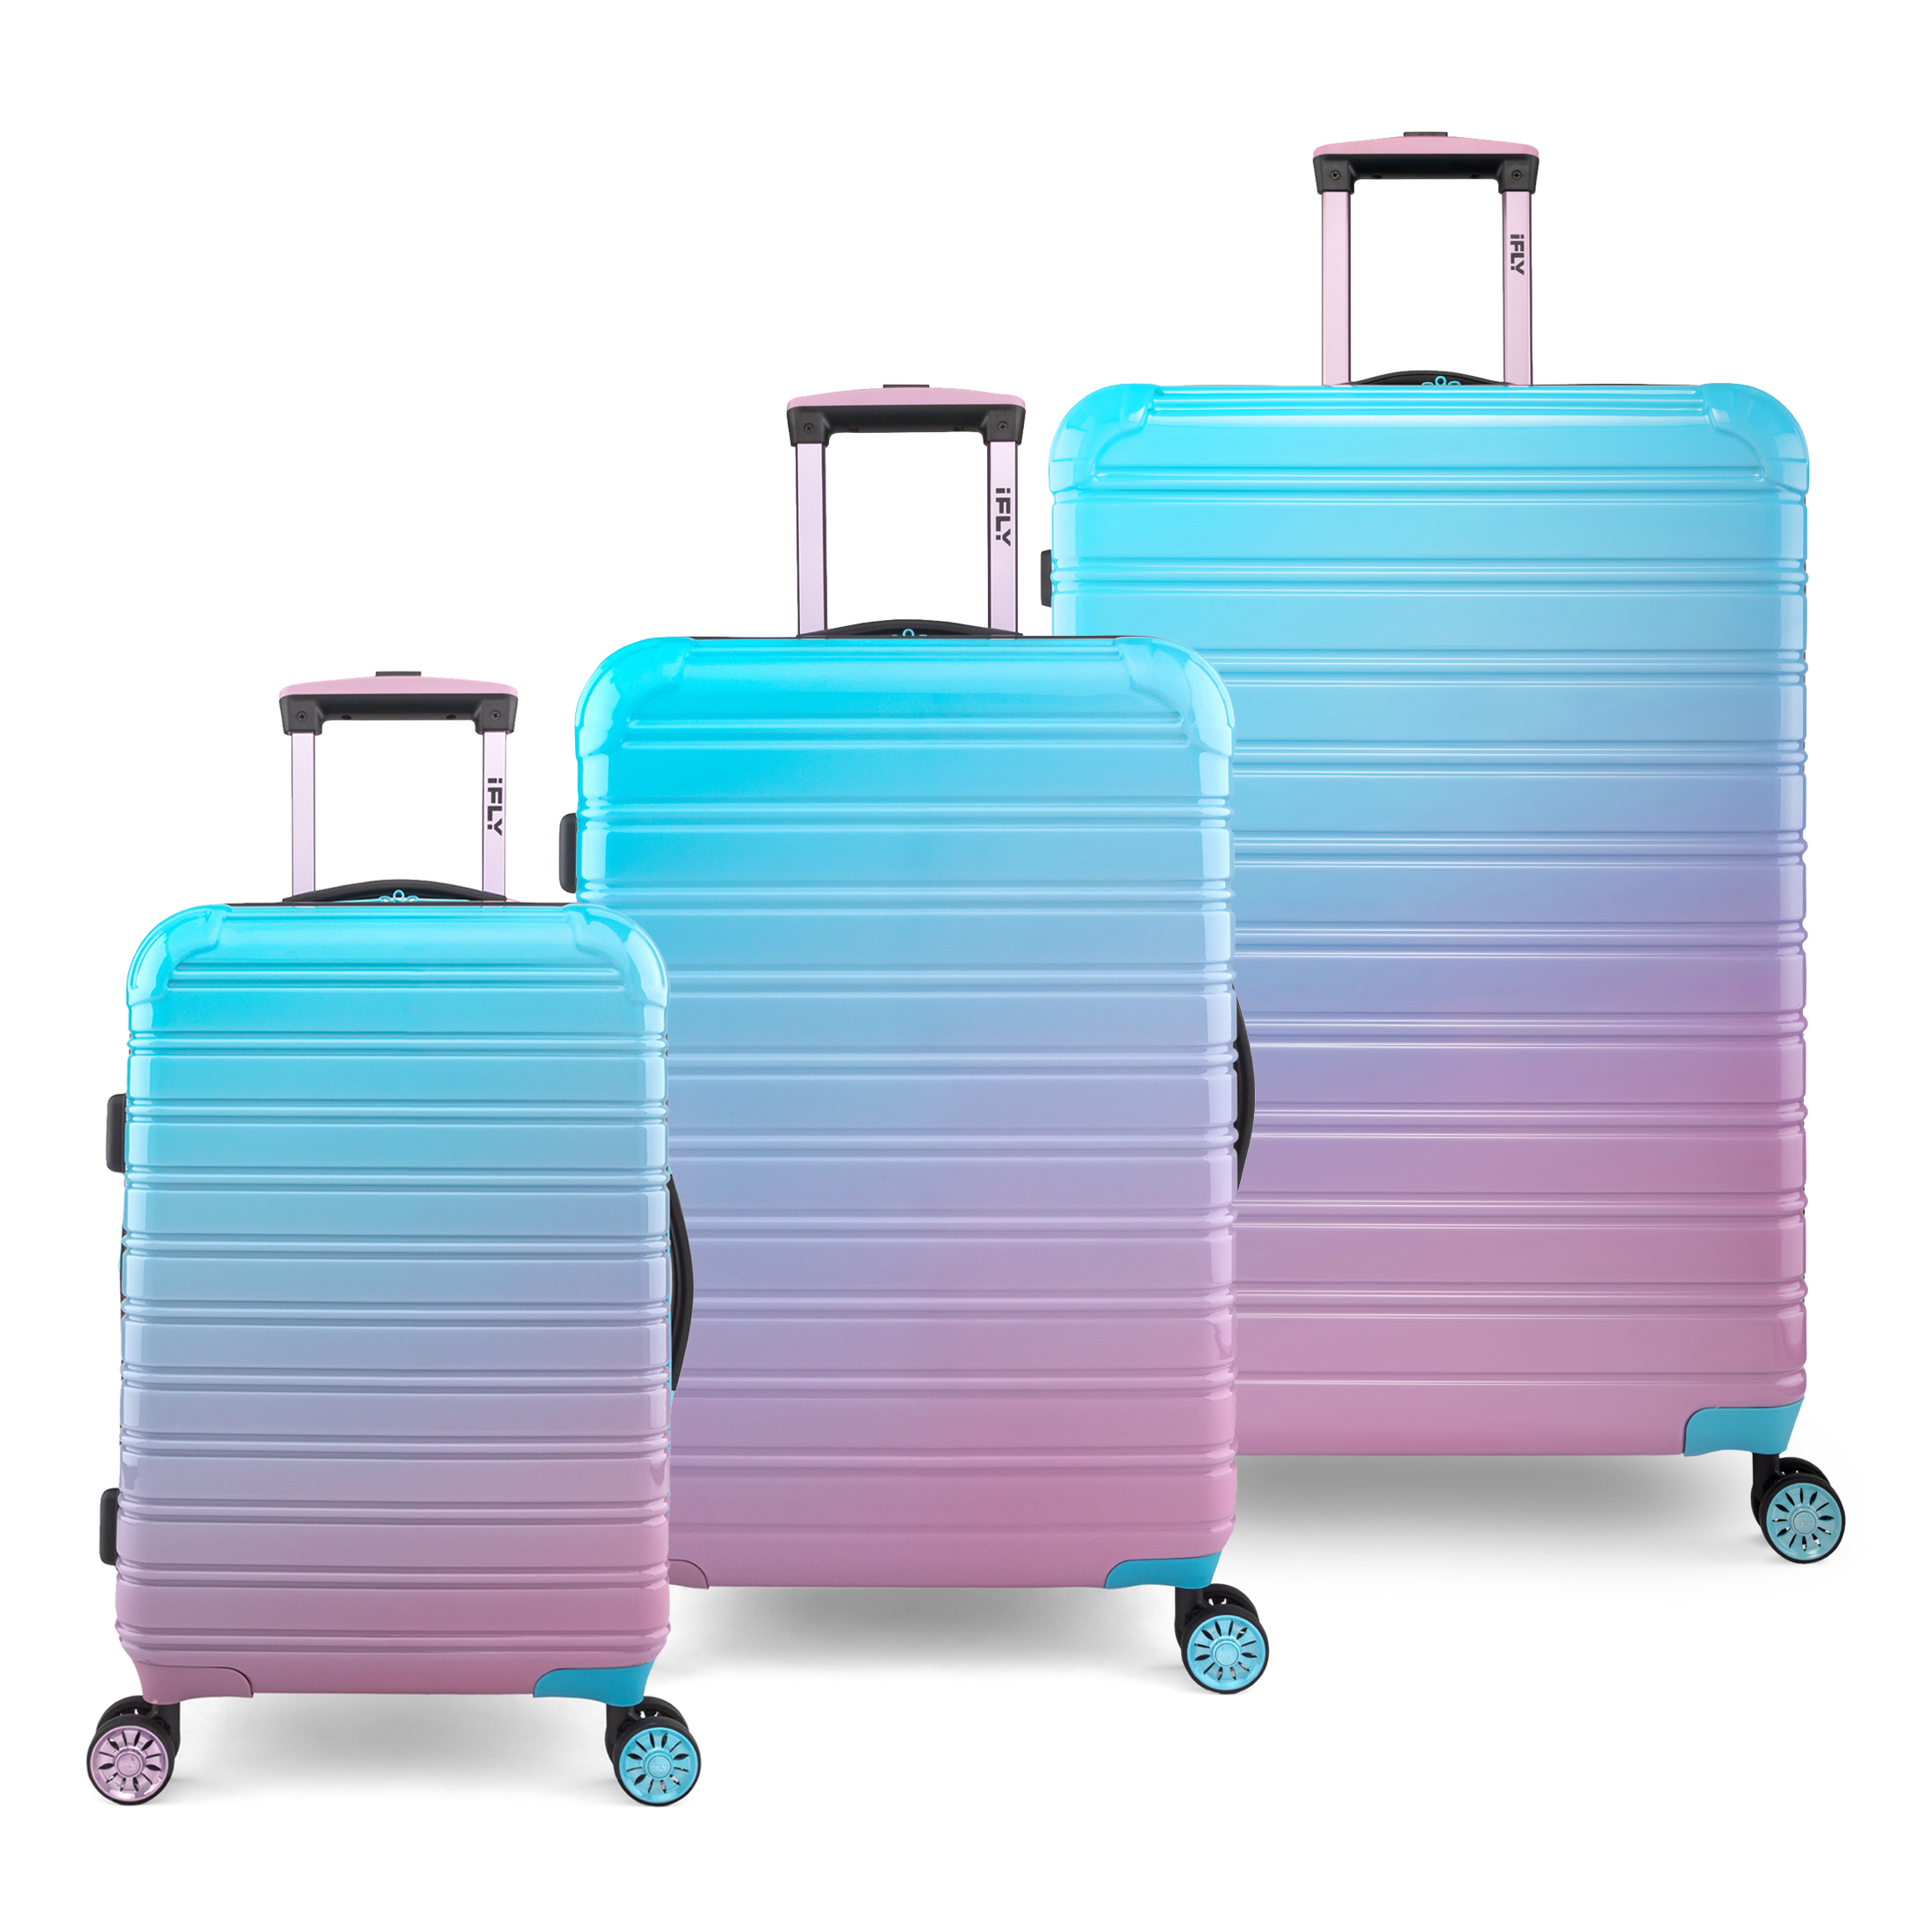 iFLY Hardside Luggage Fibertech 3 Piece Set, 20" Carry-on Luggage, 24" Checked Luggage and 28" Checked Luggage, Cotton Candy - image 1 of 12